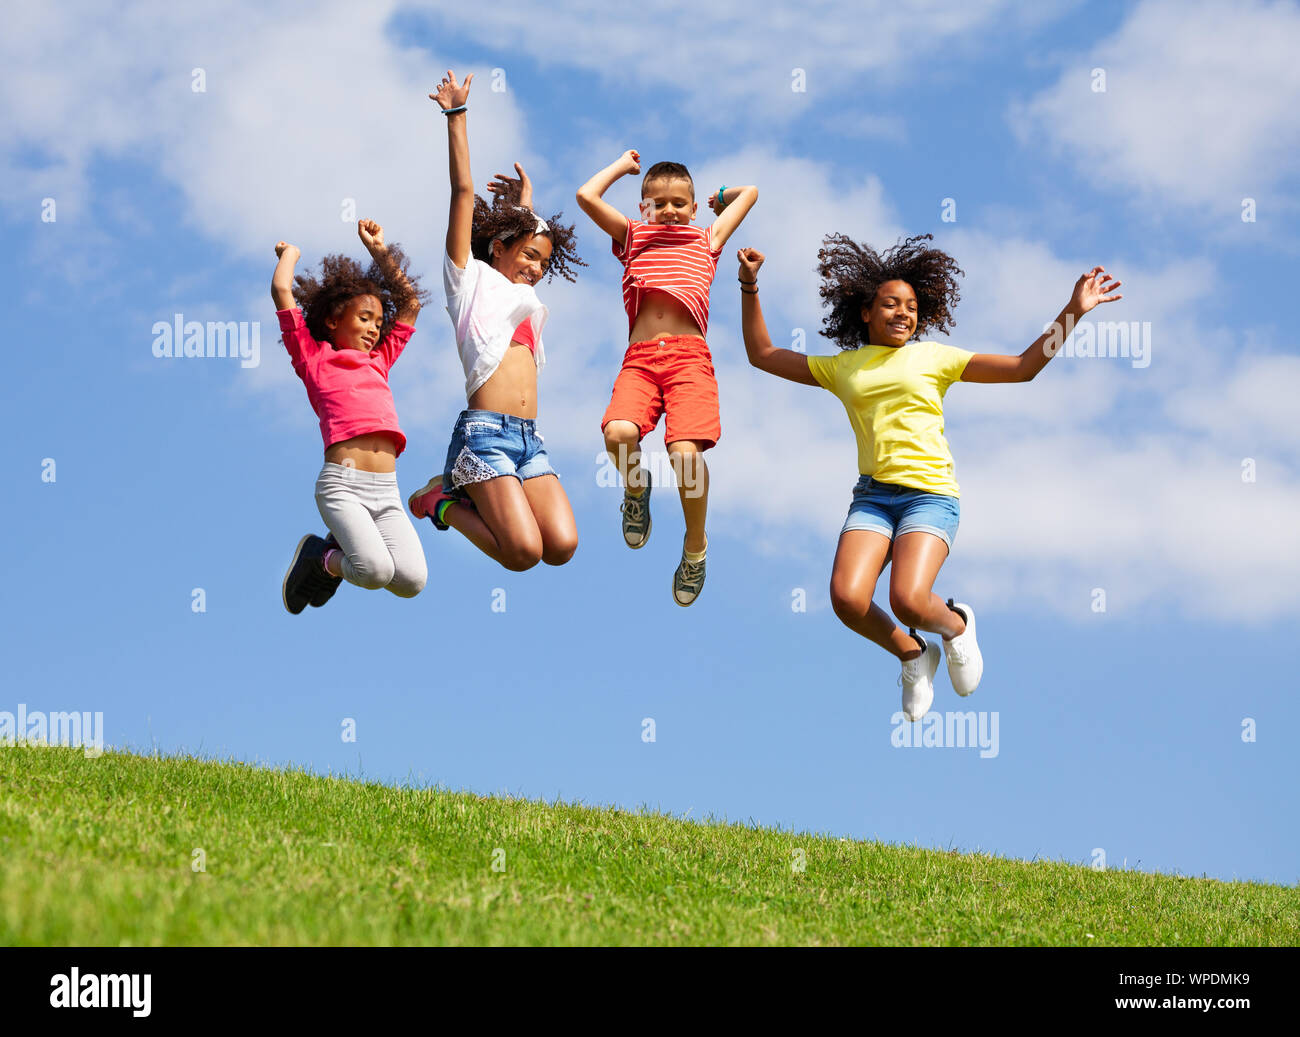 https://c8.alamy.com/comp/WPDMK9/group-four-jumping-kids-over-blue-sky-WPDMK9.jpg